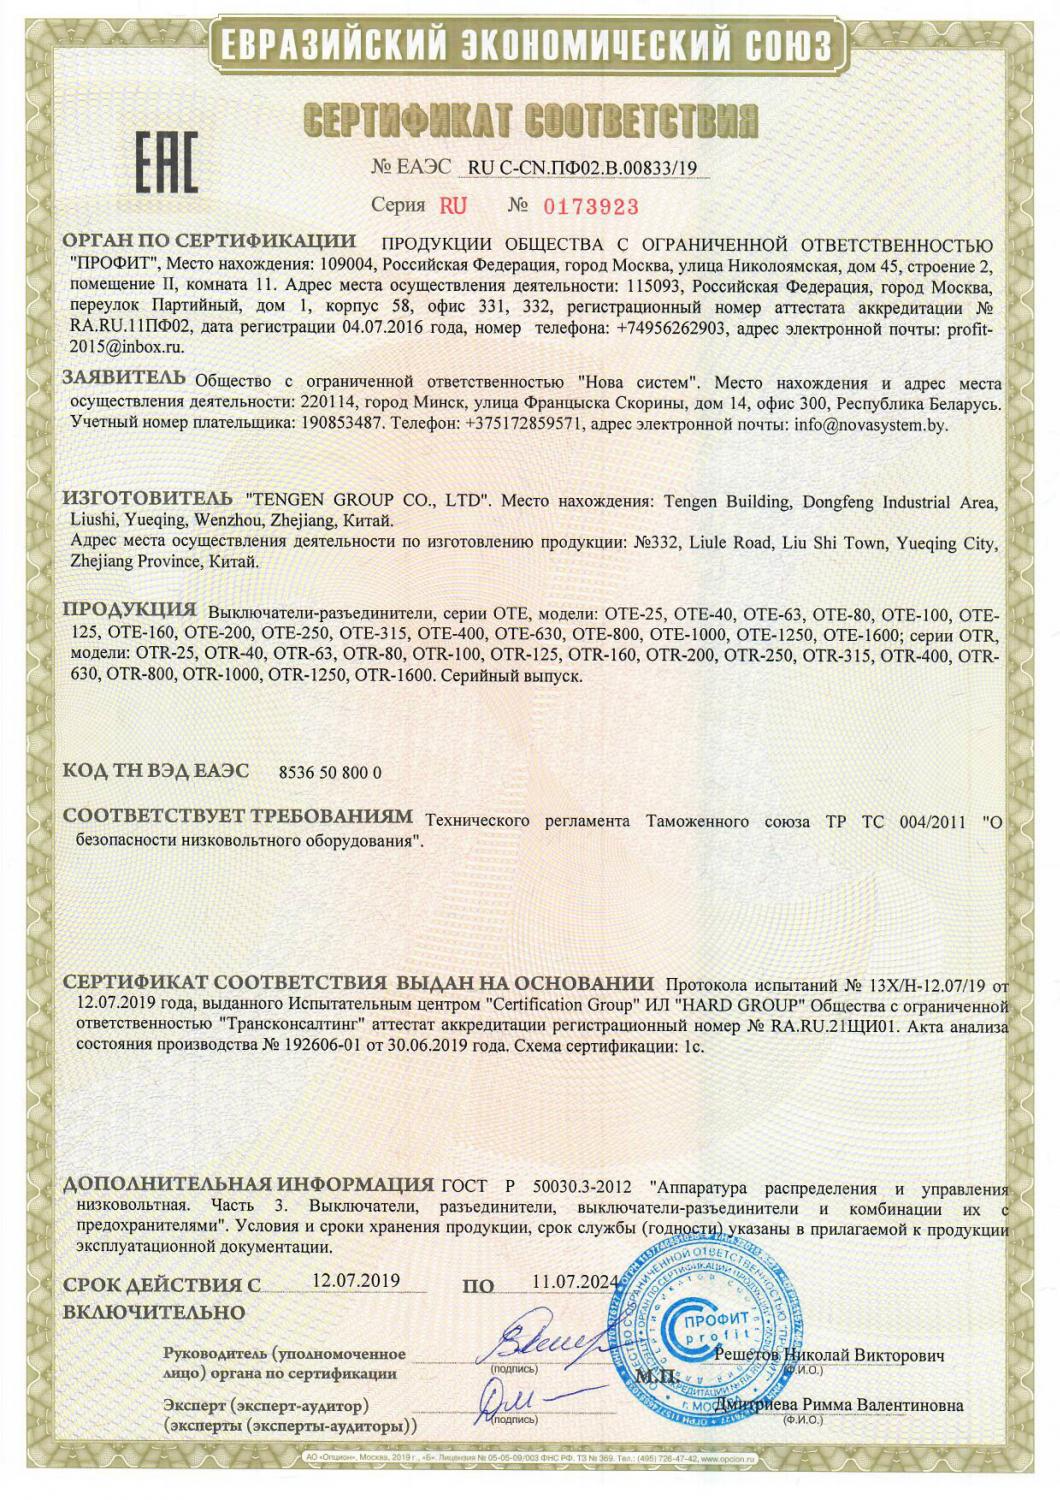 Сертификат соответствия на выключатели-разъединители